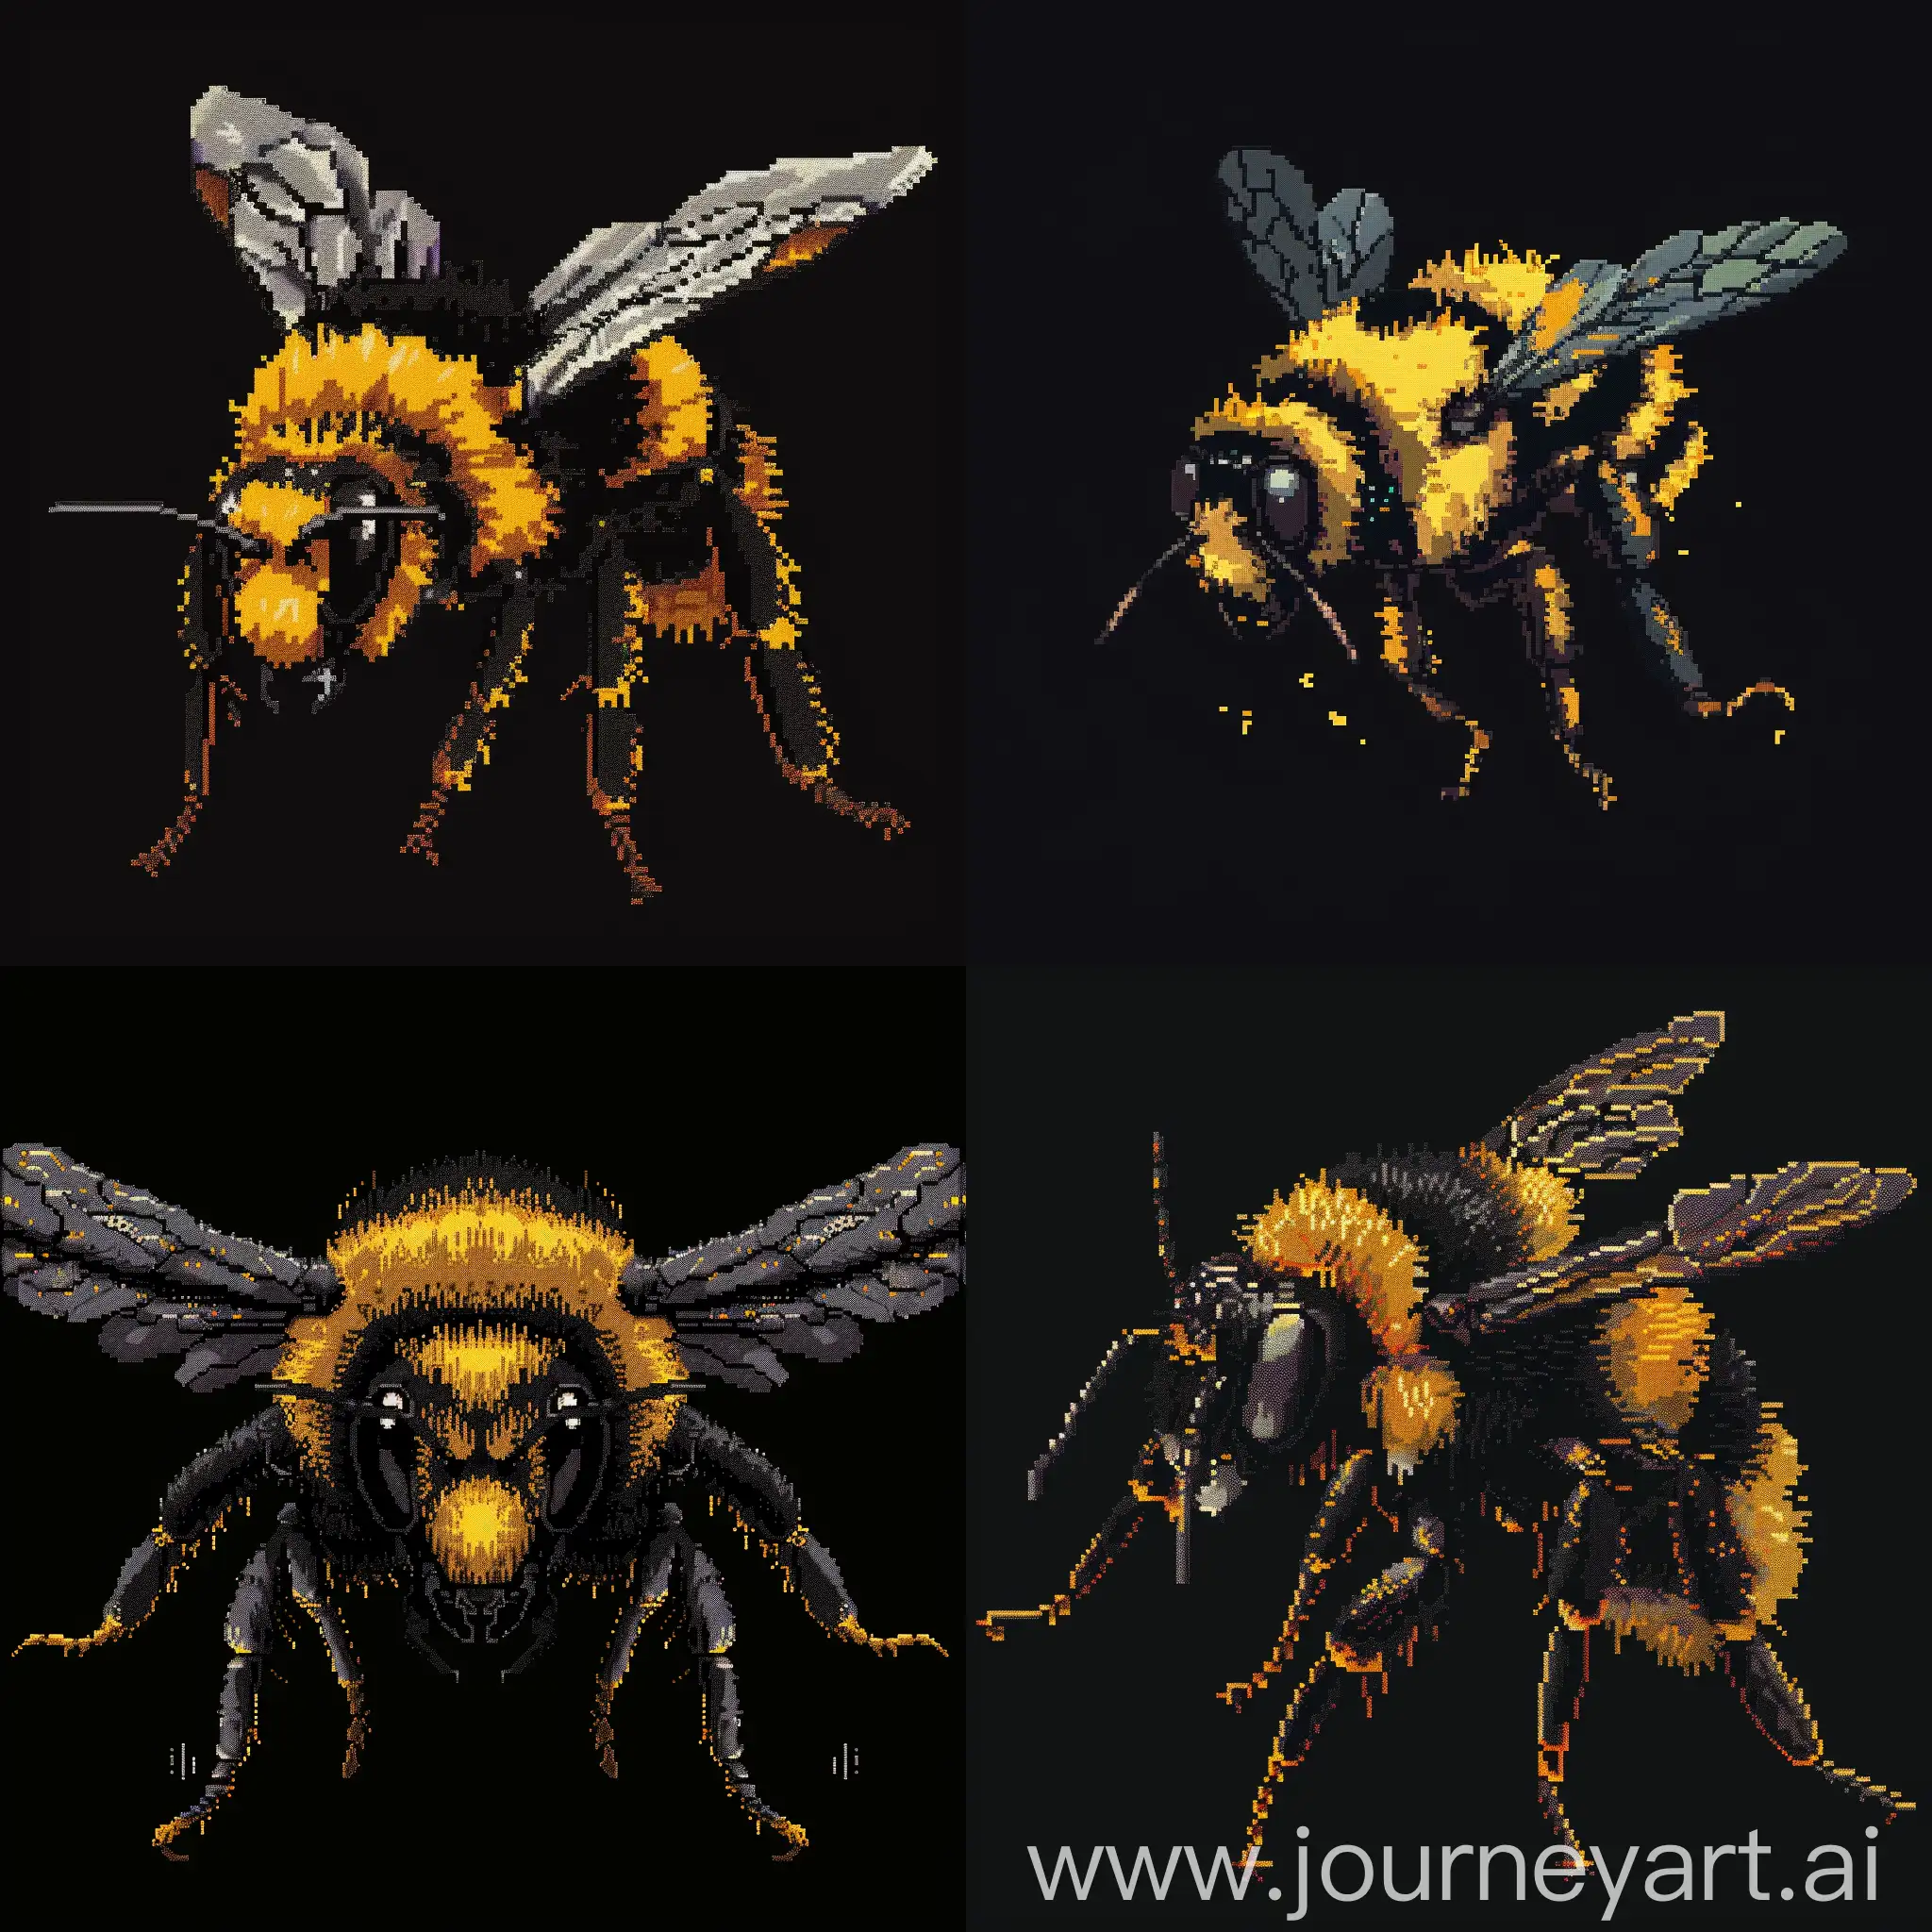  bumblebee pixel art, background all black, horror style, Says hi
